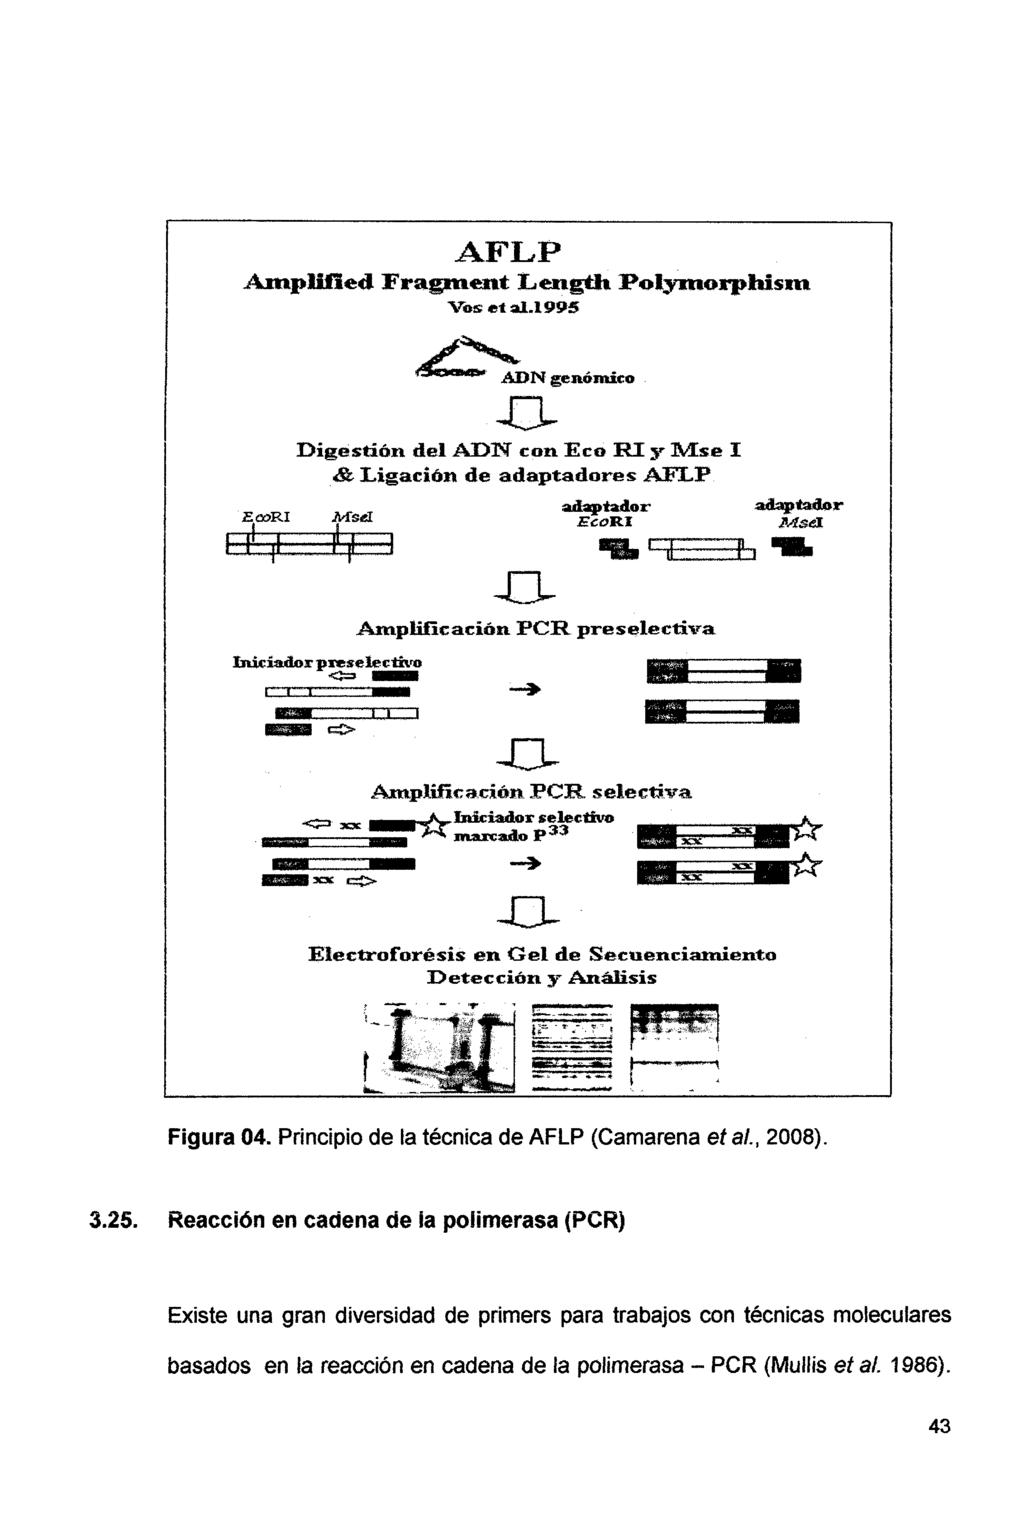 AFLP AinplUted Fragment Length Polymorphism Vos et al.1995 ~Ngenómico EooRI Digestión del ADN con Eco RI y Mse I & Ligación de adap'tadores AFLP Msd adaptador EcoRI adaptador ~Asd. 11 1. ~ 1 T.